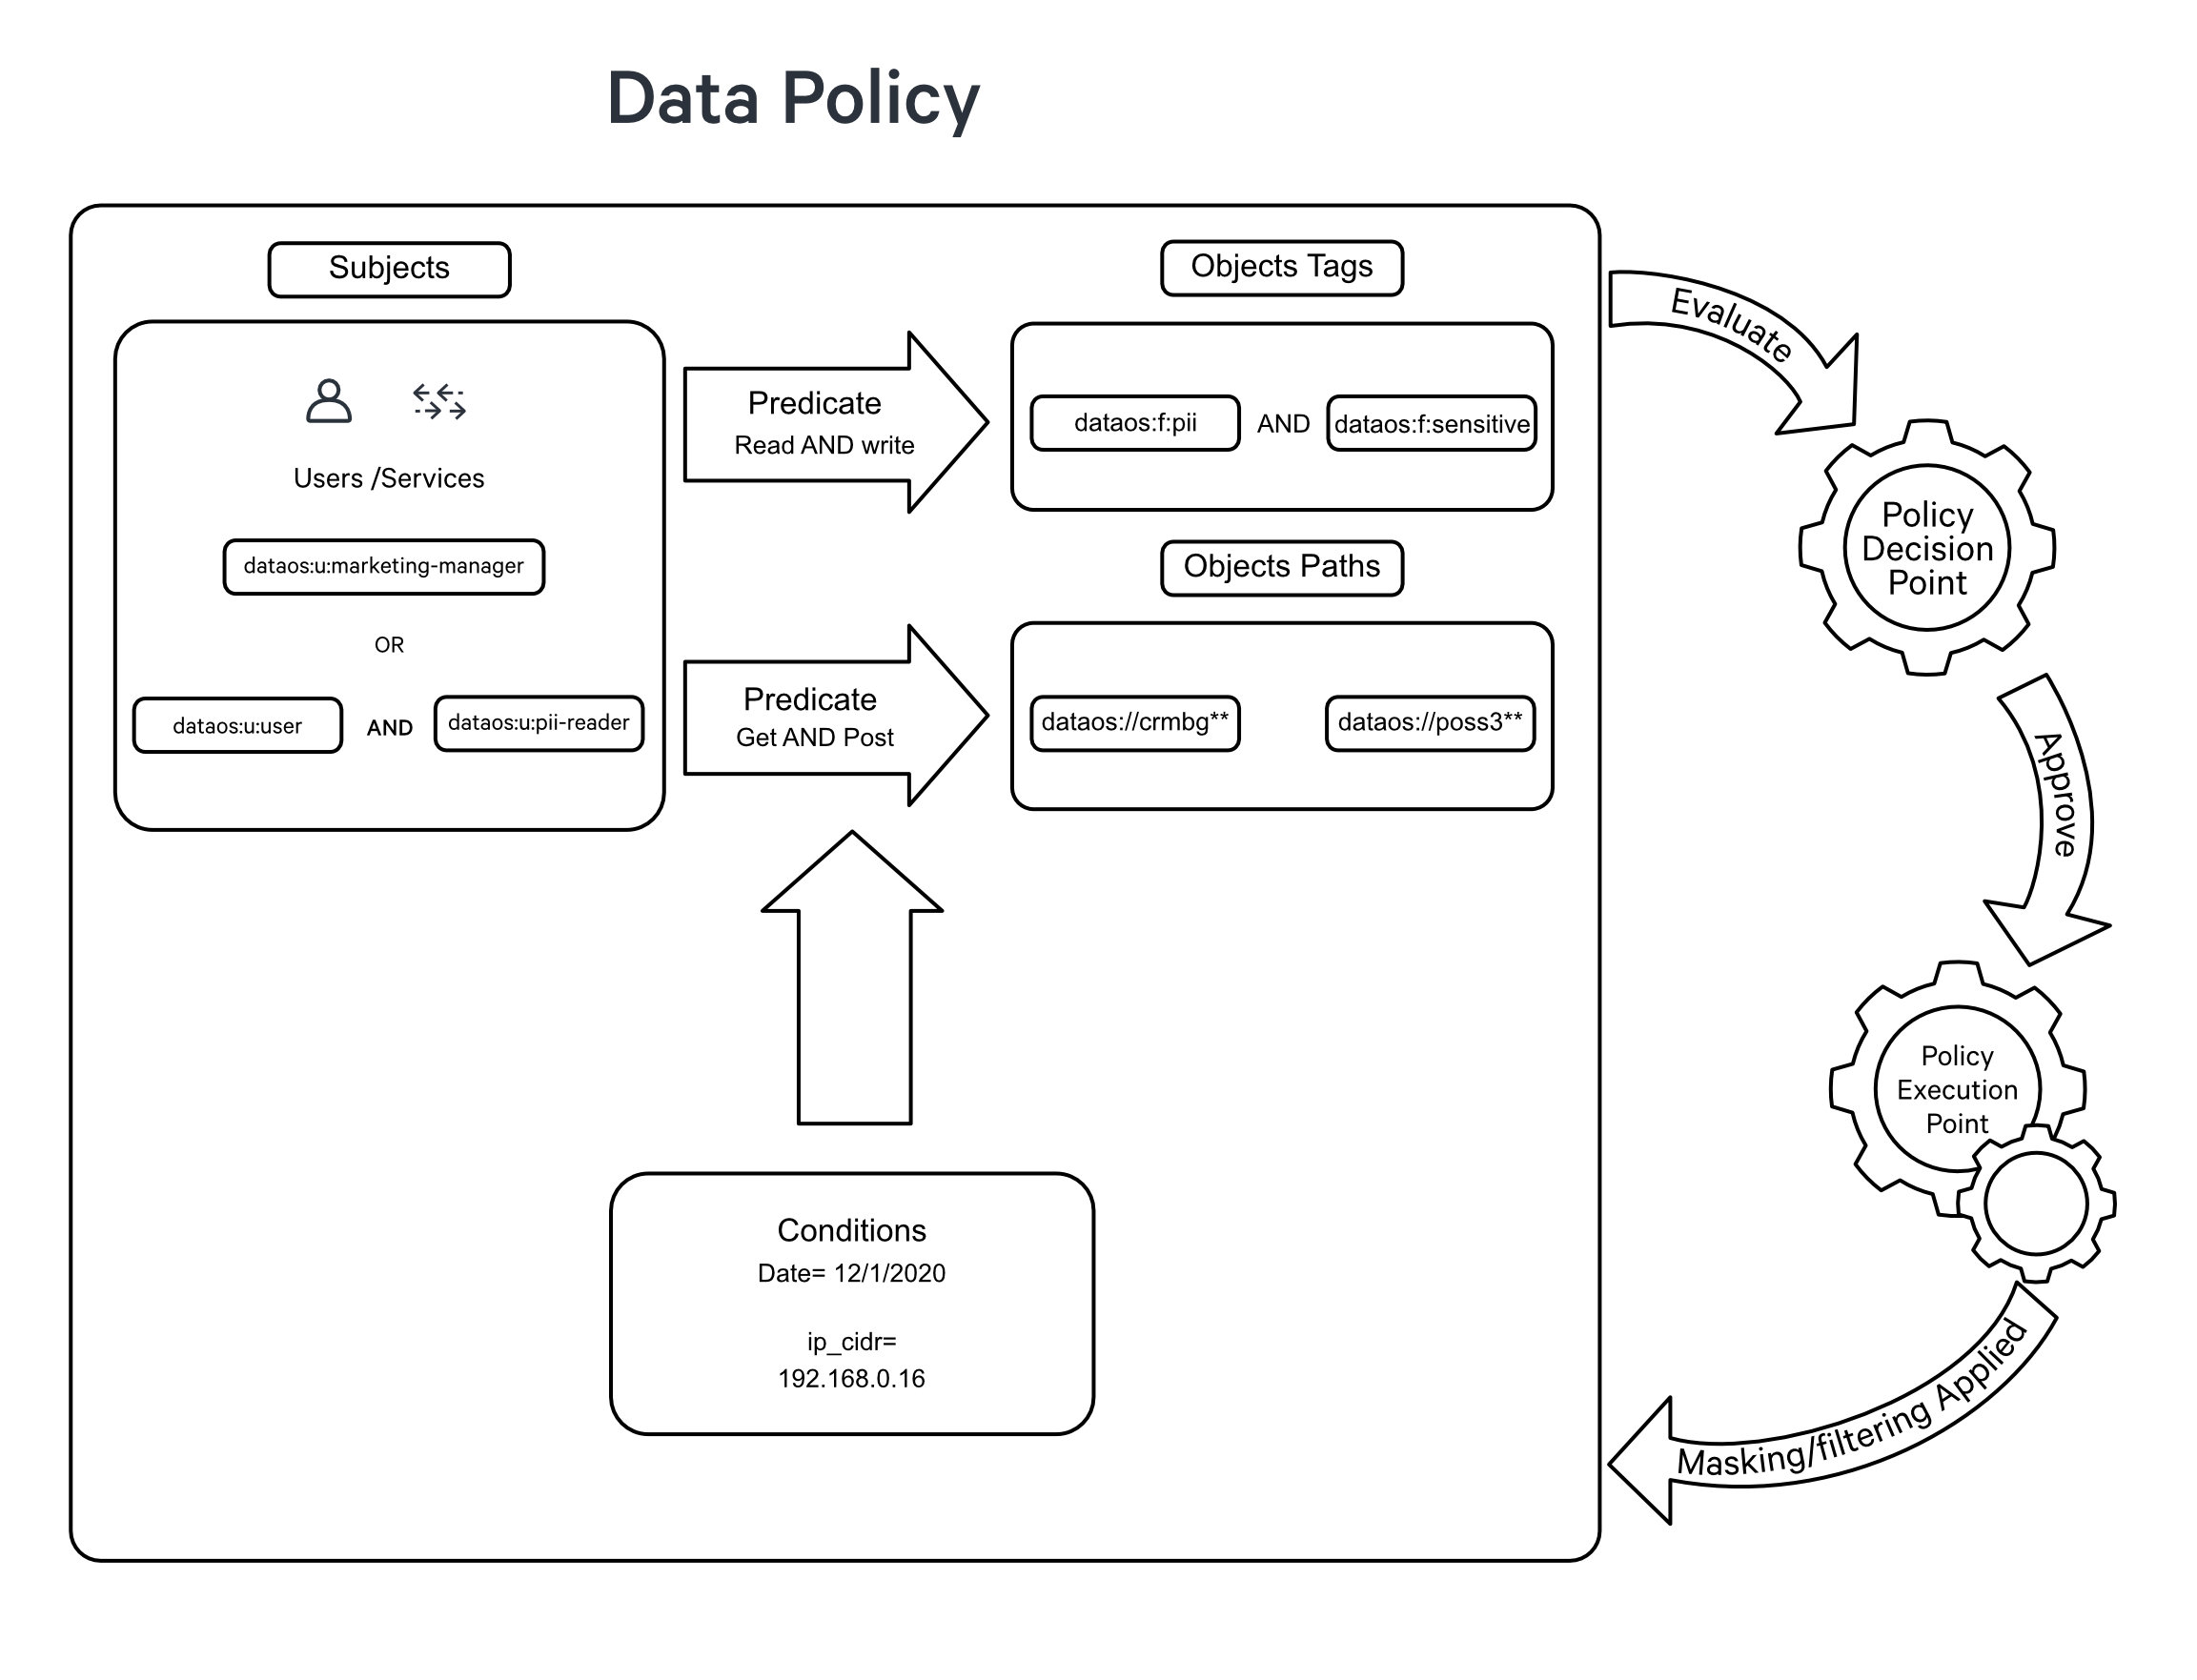 governance-policies-data-policy.jpg